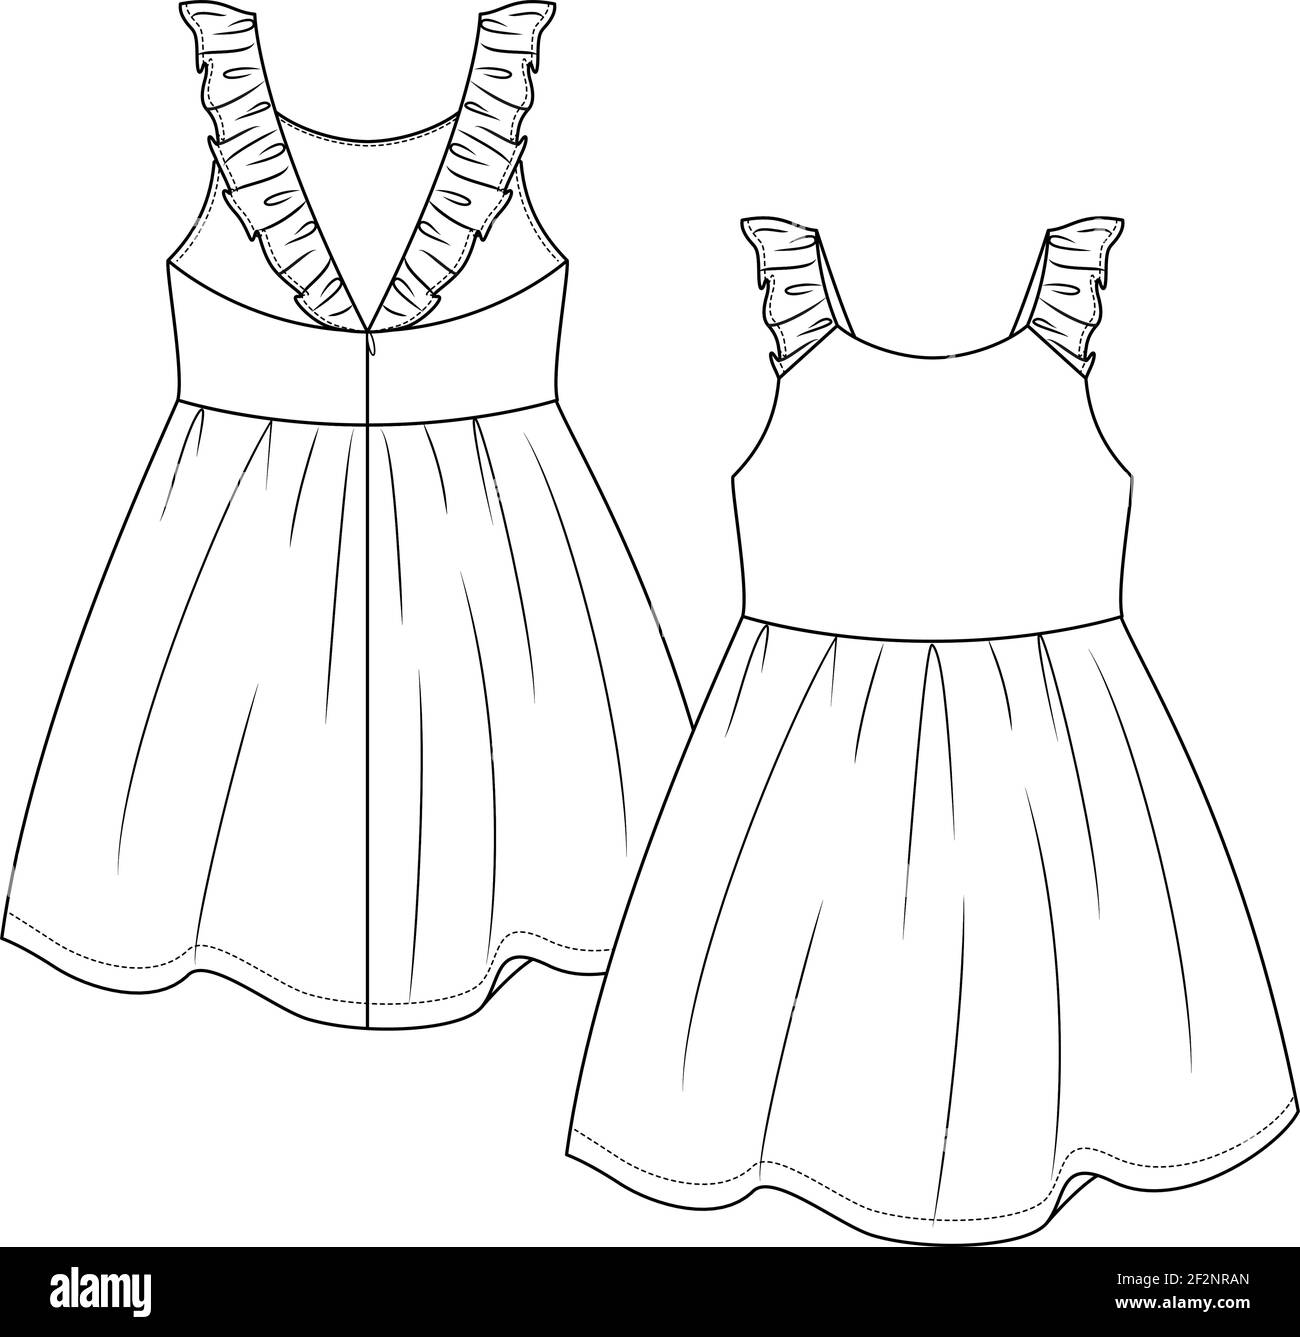 Outline Sketch Fashion Sketch Drawing Of Kids Girl Frock Dress, Line ...